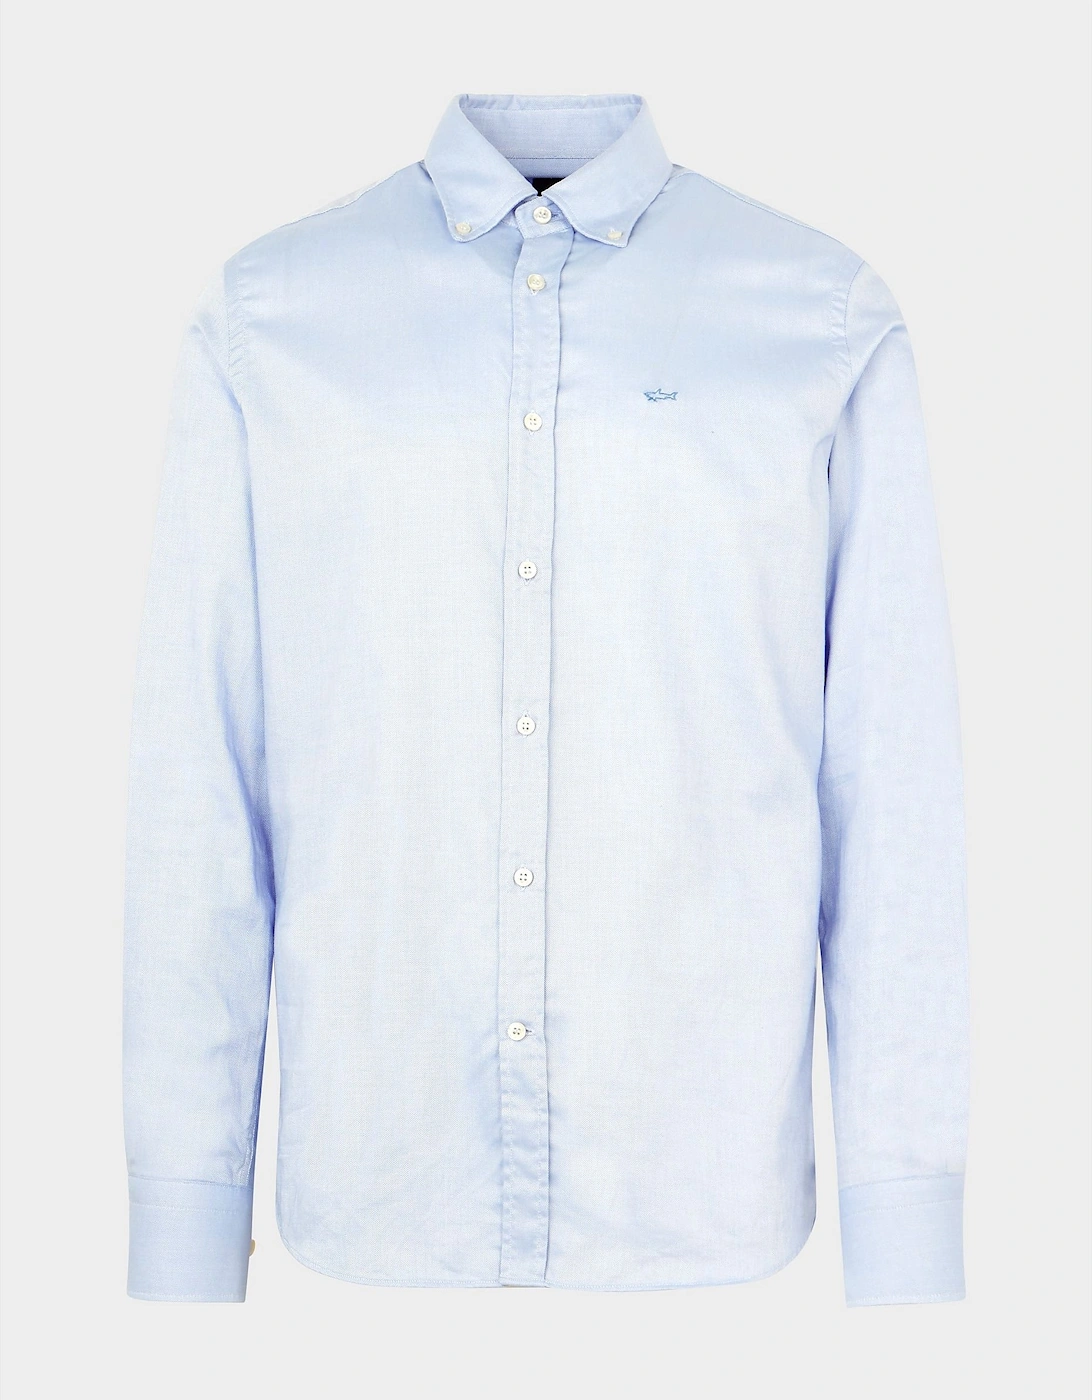 Mens Cotton Oxford Long Sleeve Shirt